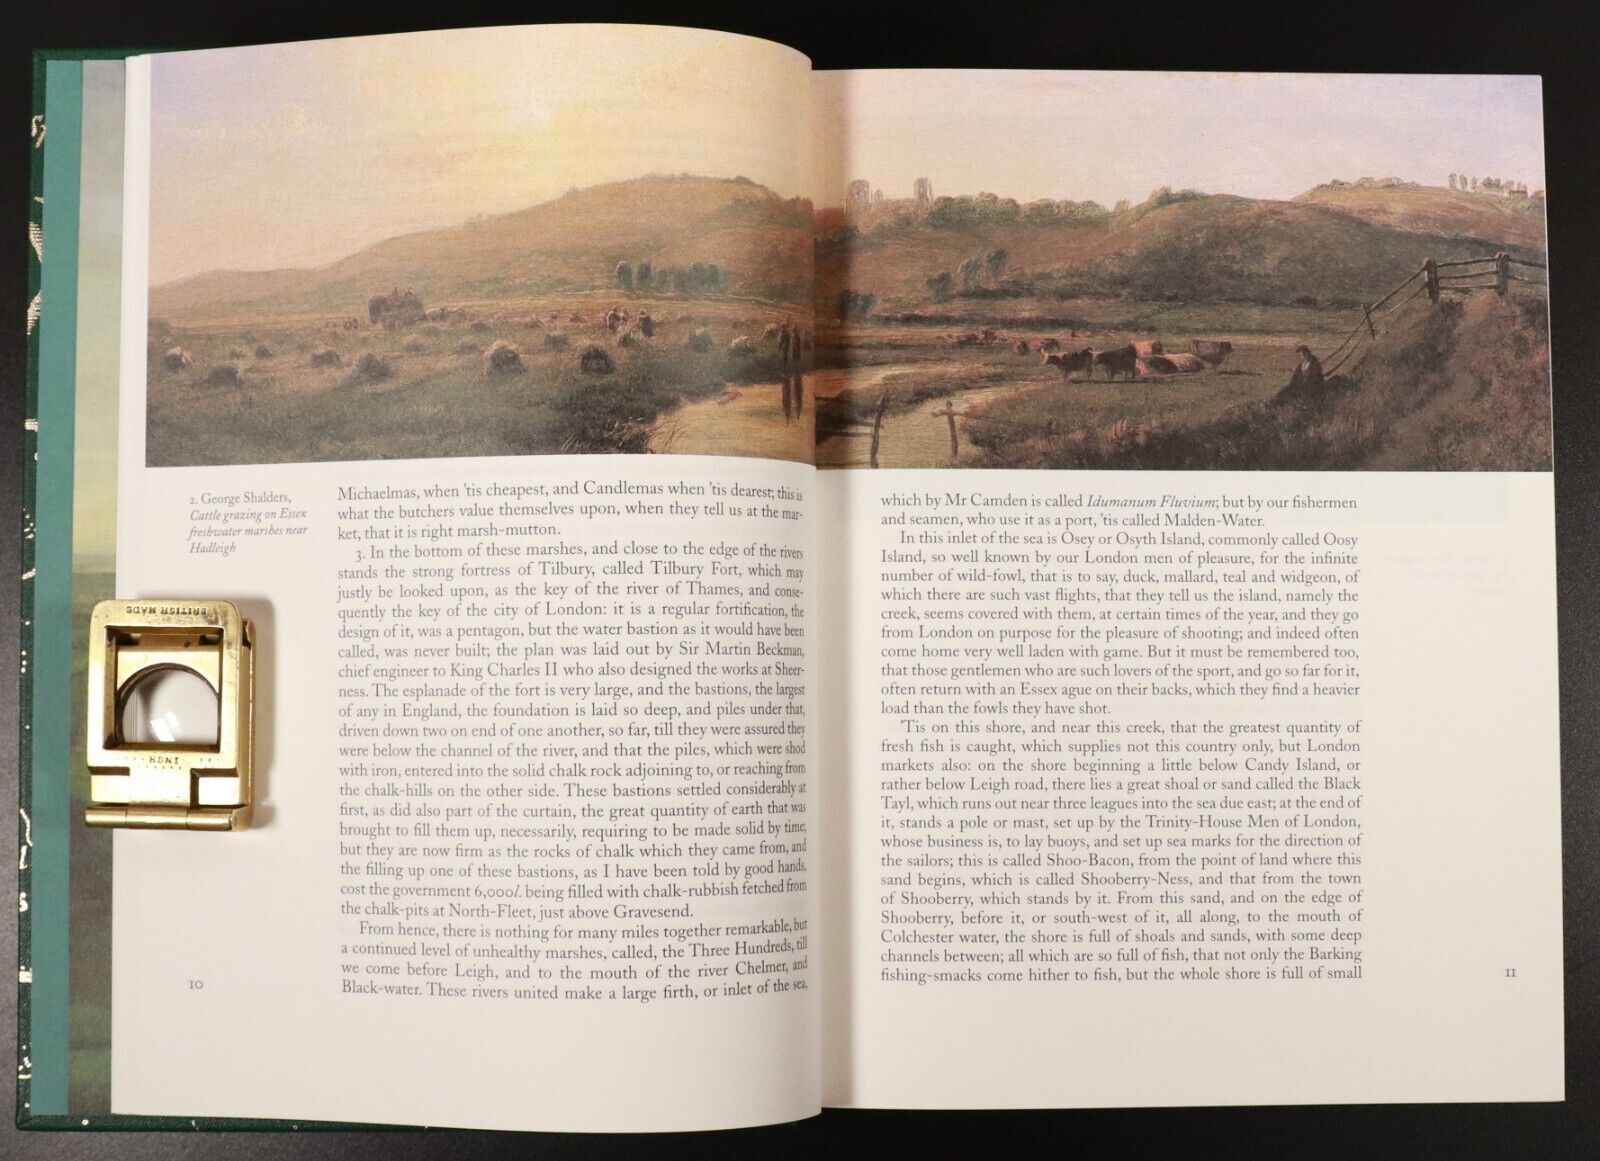 2006 A Tour Through Great Britain by Daniel Defoe Folio Society History Book